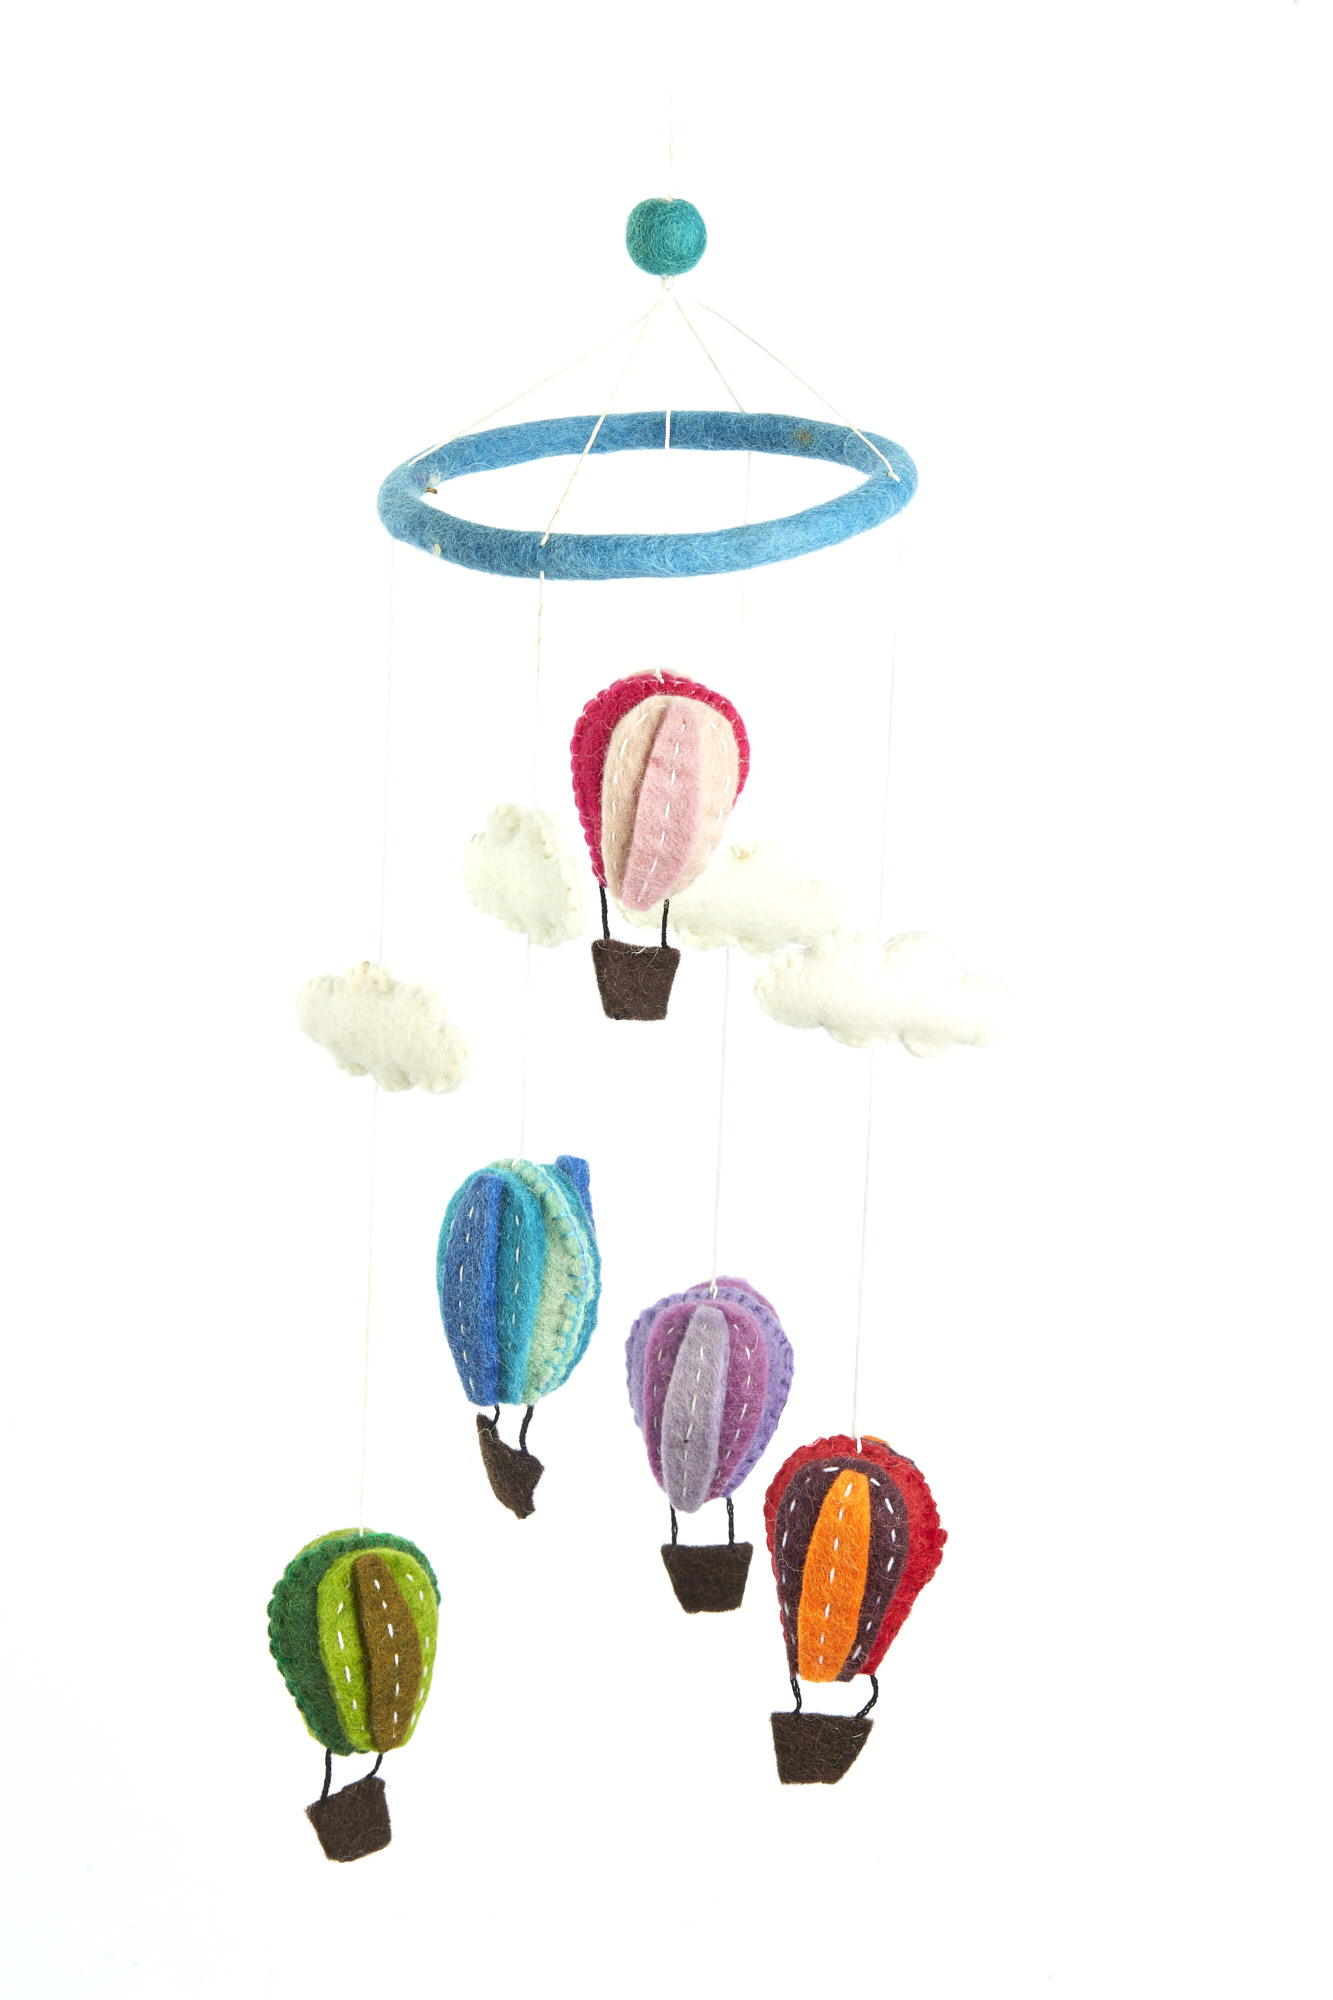 Rundmobile mit Heißluftballons, handgefiltzt